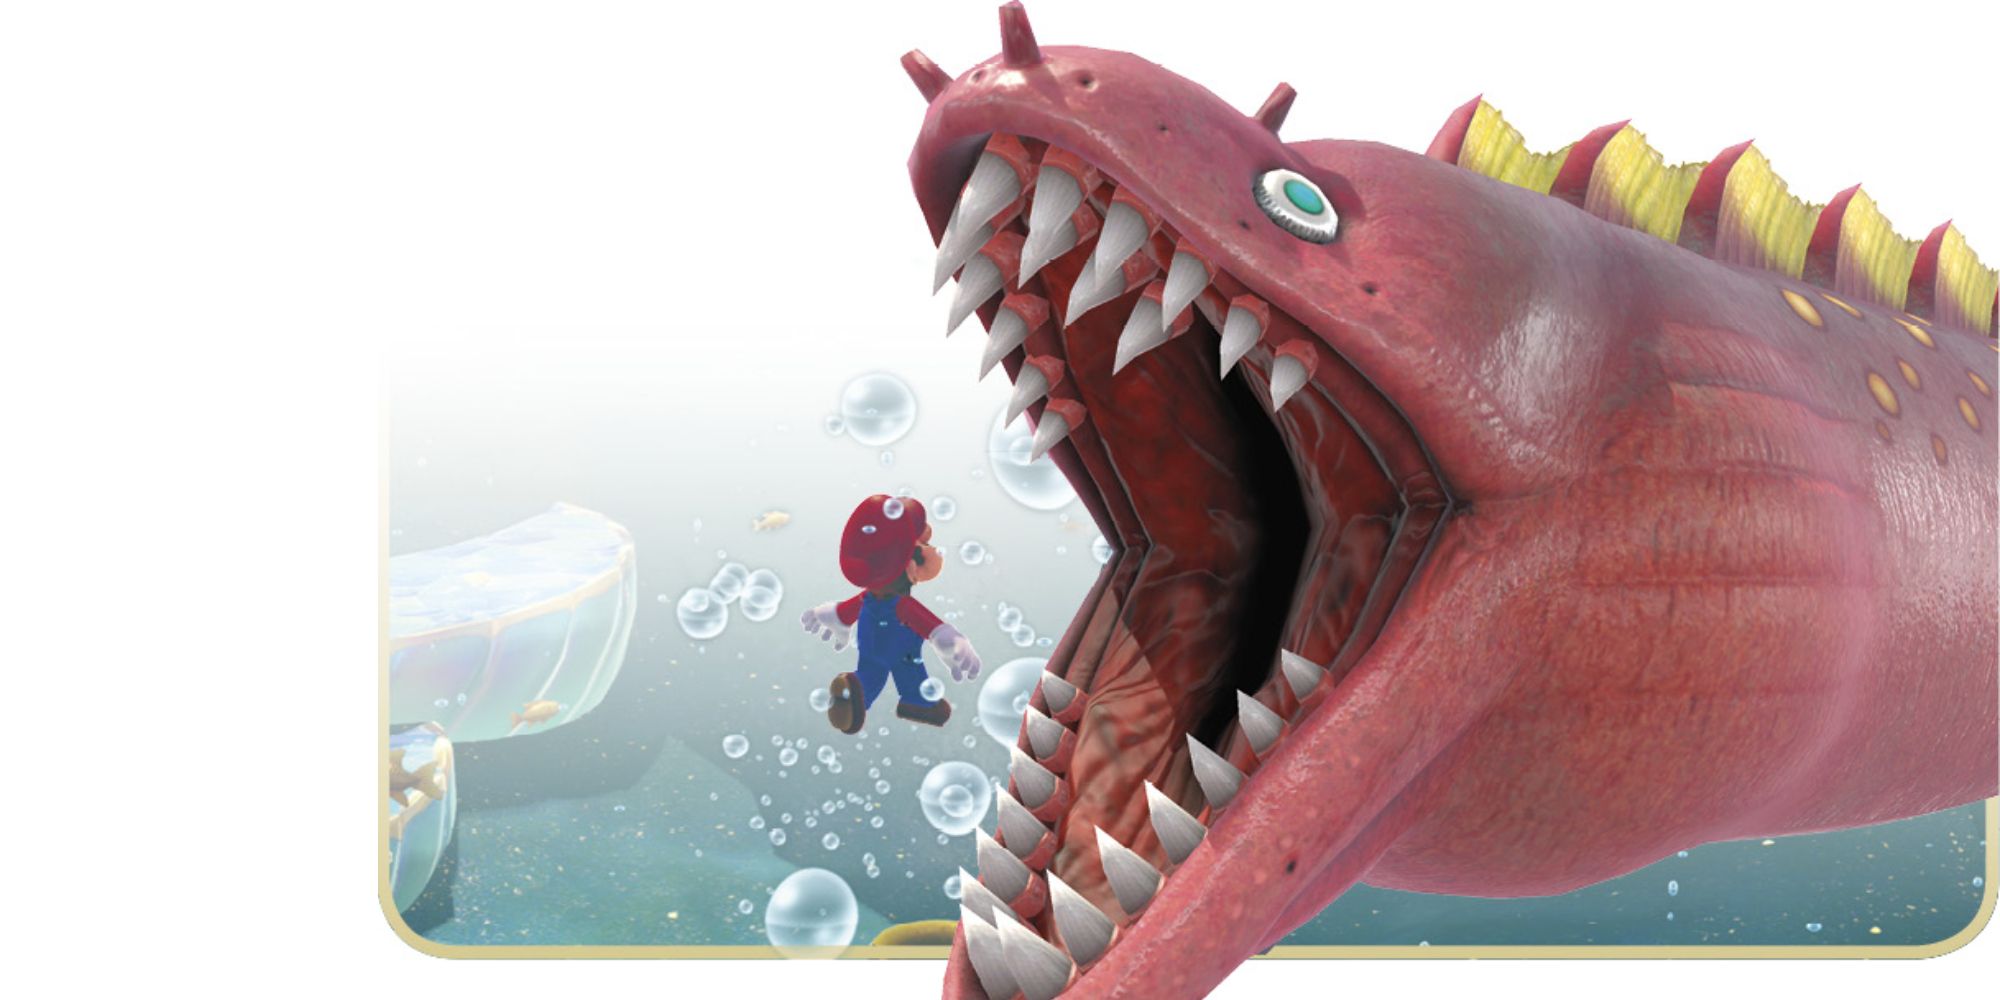 Mario est attaqué par un Maw-Ray dans un jeu vidéo Mario.